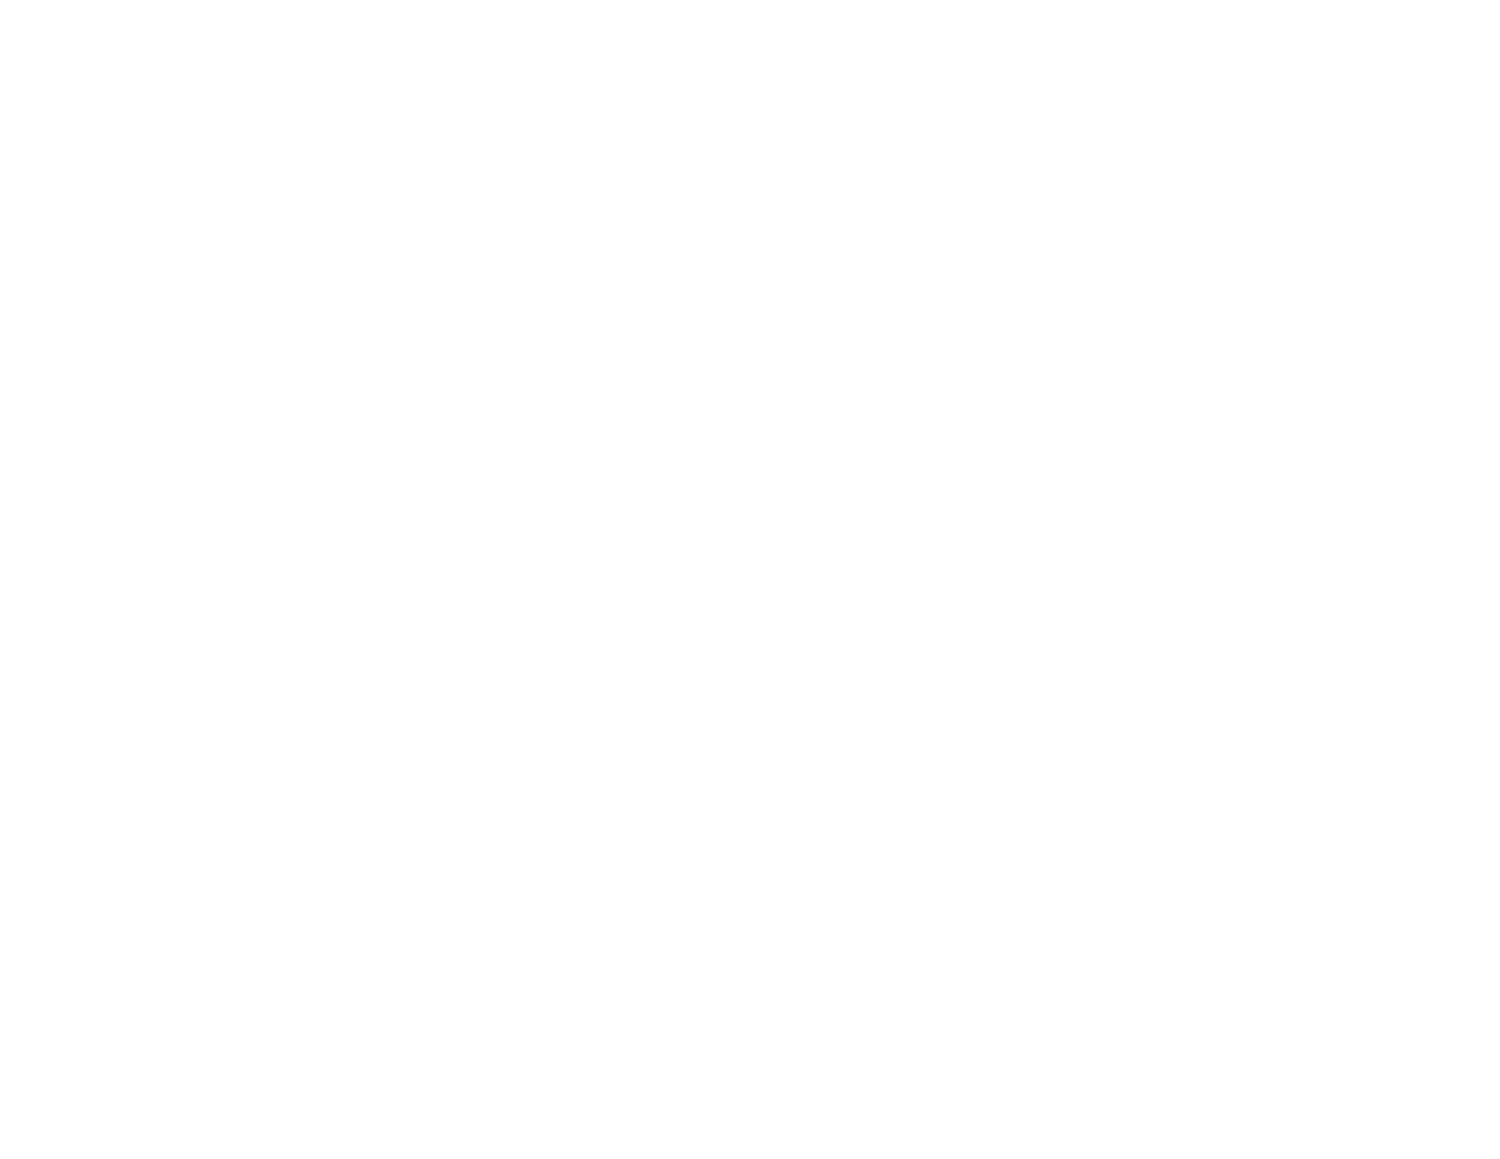 Help Build Hope